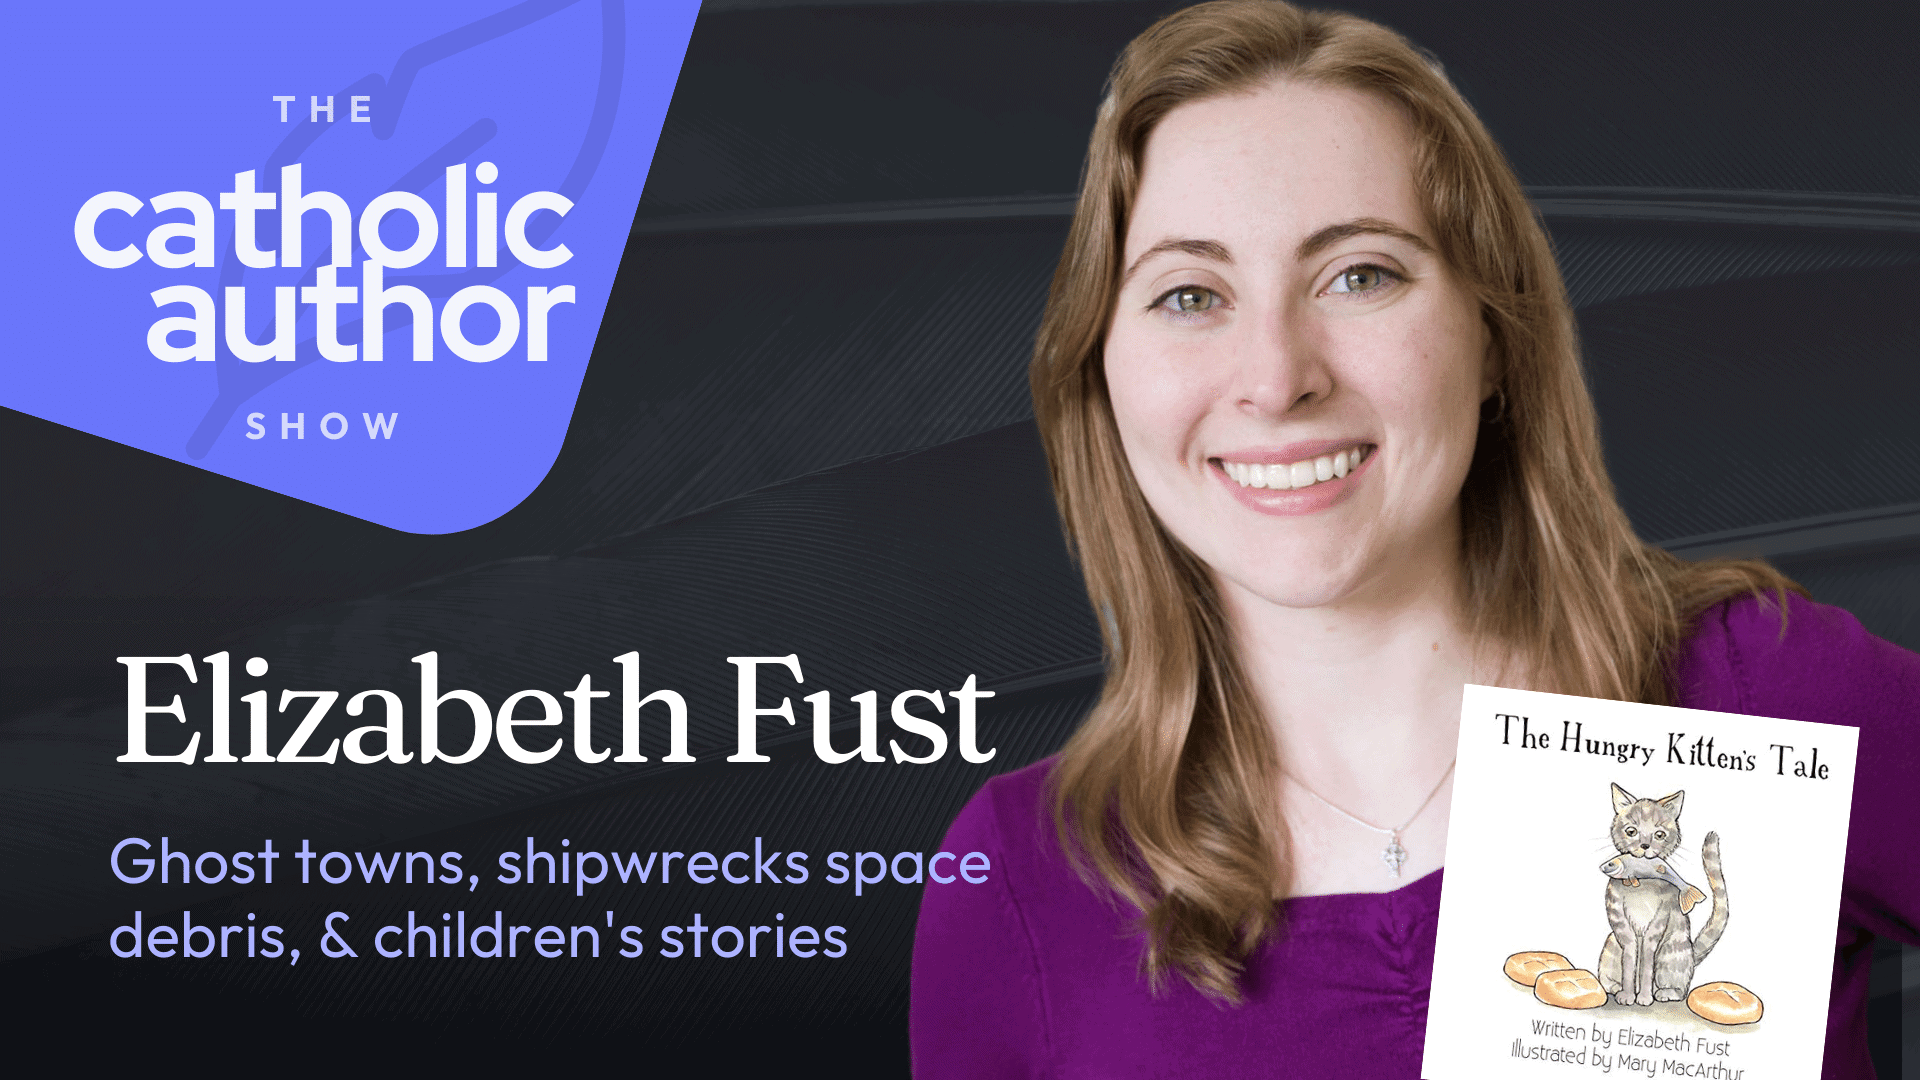 Ghost towns, shipwrecks space debris, & children’s stories with Elizabeth Fust